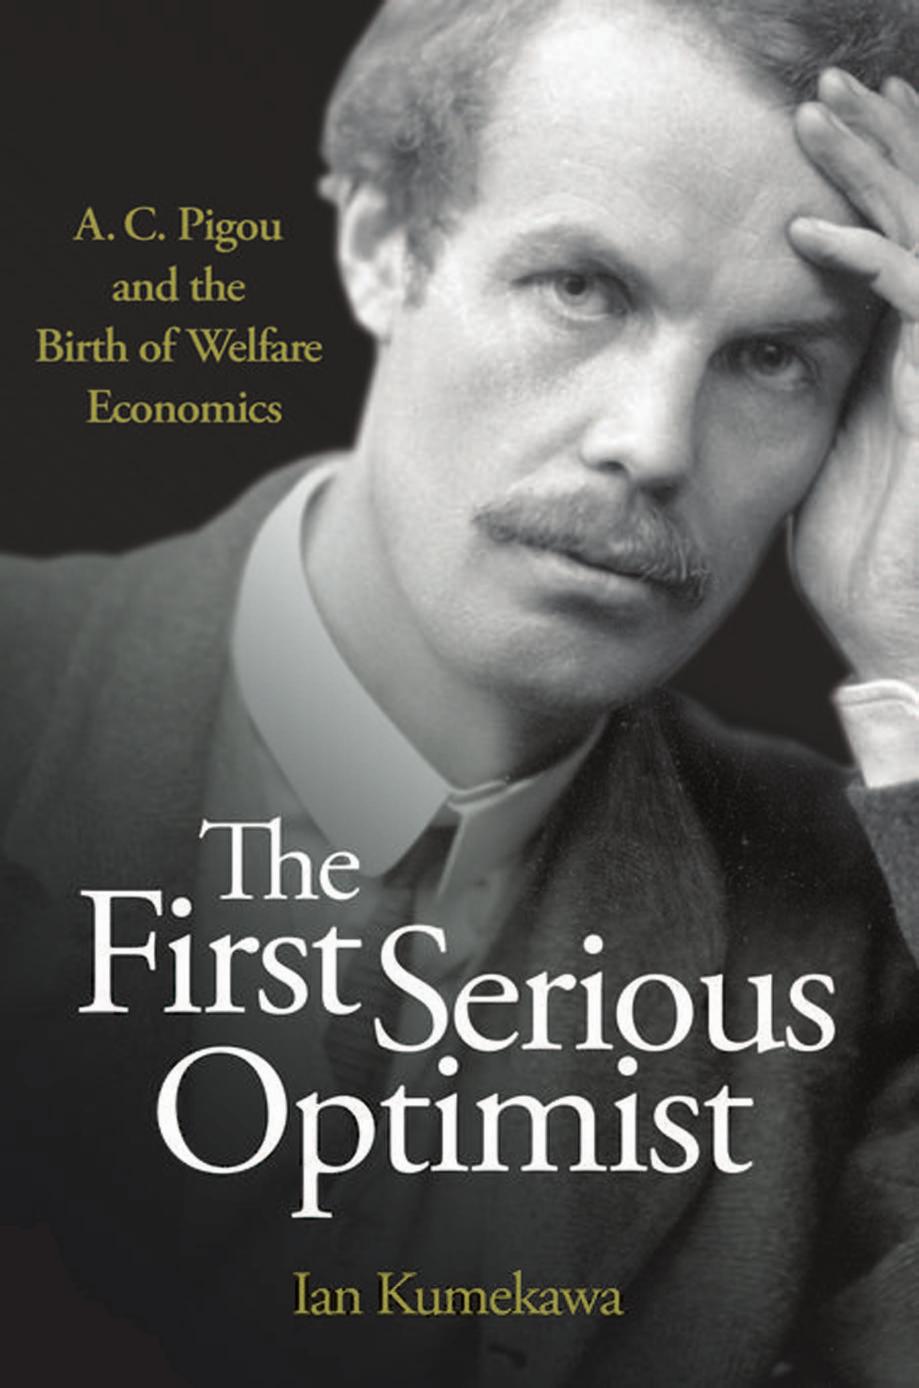 The First Serious Optimist: A. C. Pigou and the Birth of Welfare Economics by Ian Kumekawa